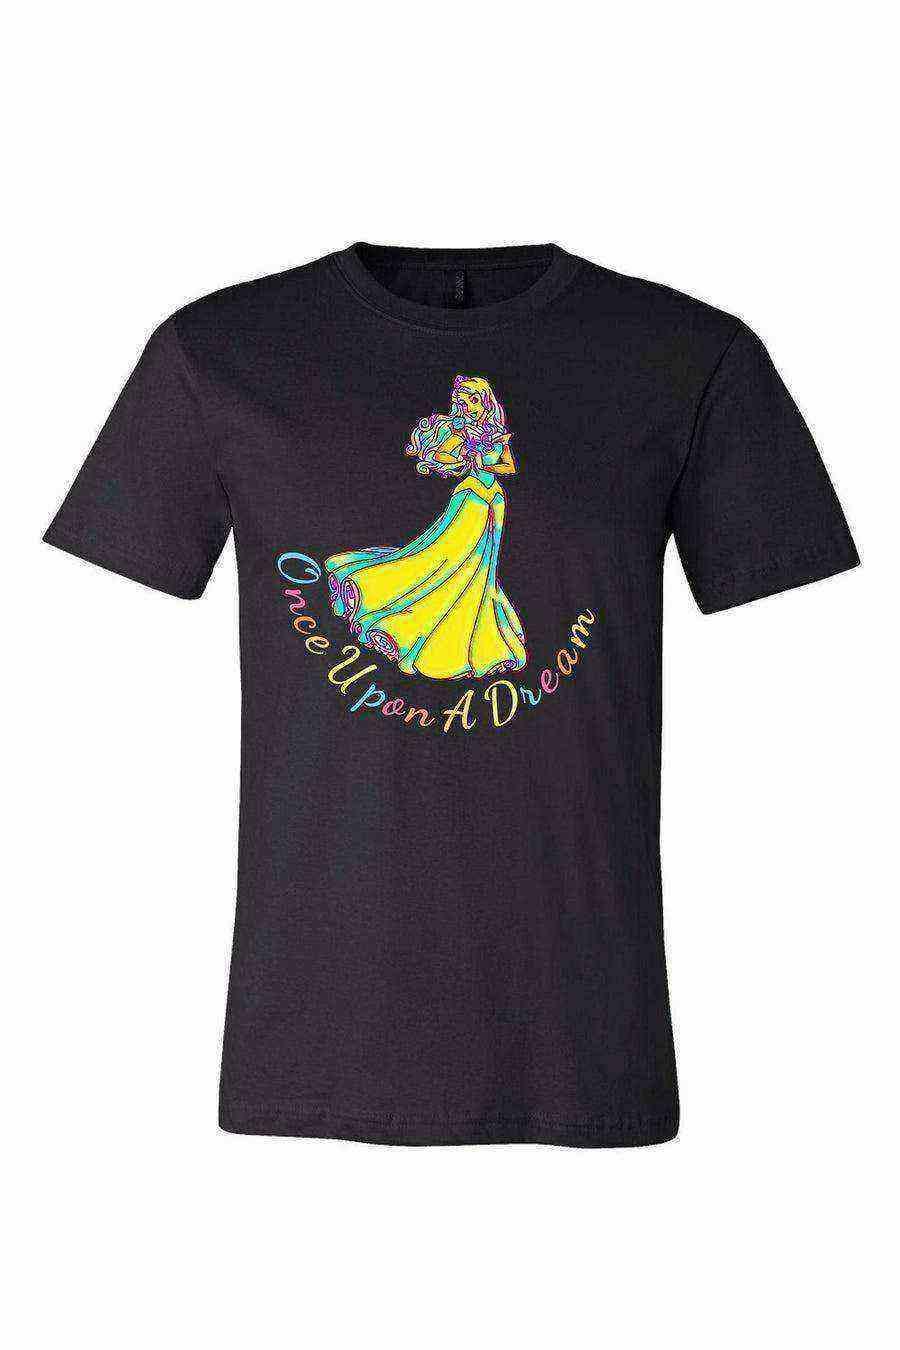 Womens | Sleeping Beauty Once Upon A Dream Shirt | Princess Aurora - Dylan's Tees